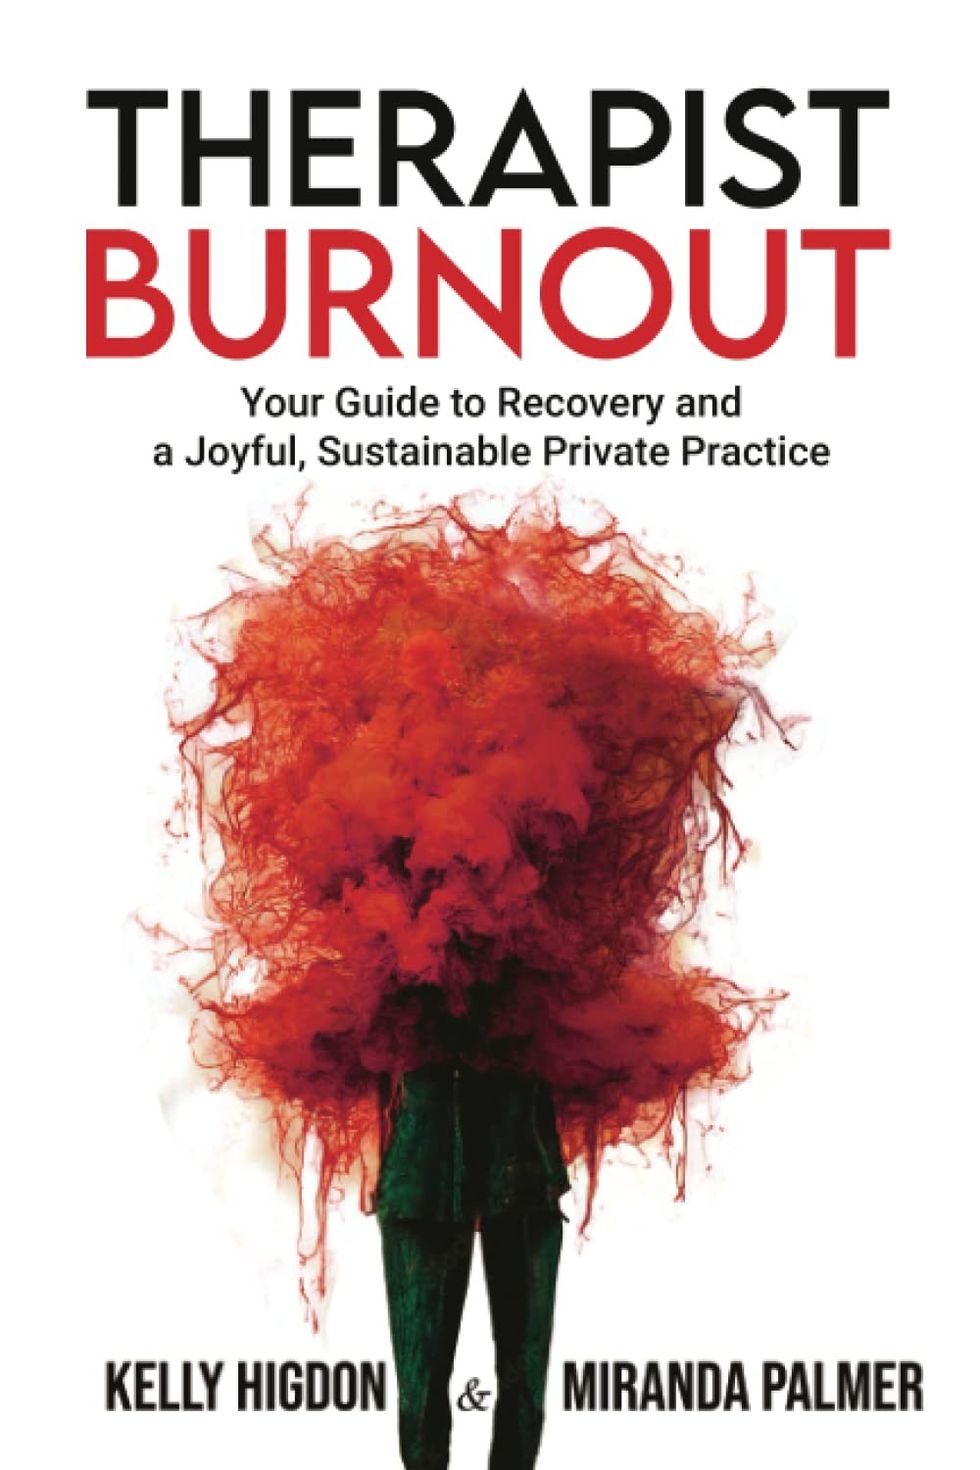 Therapist Burnout by Kelly Higdon and Miranda Palmer